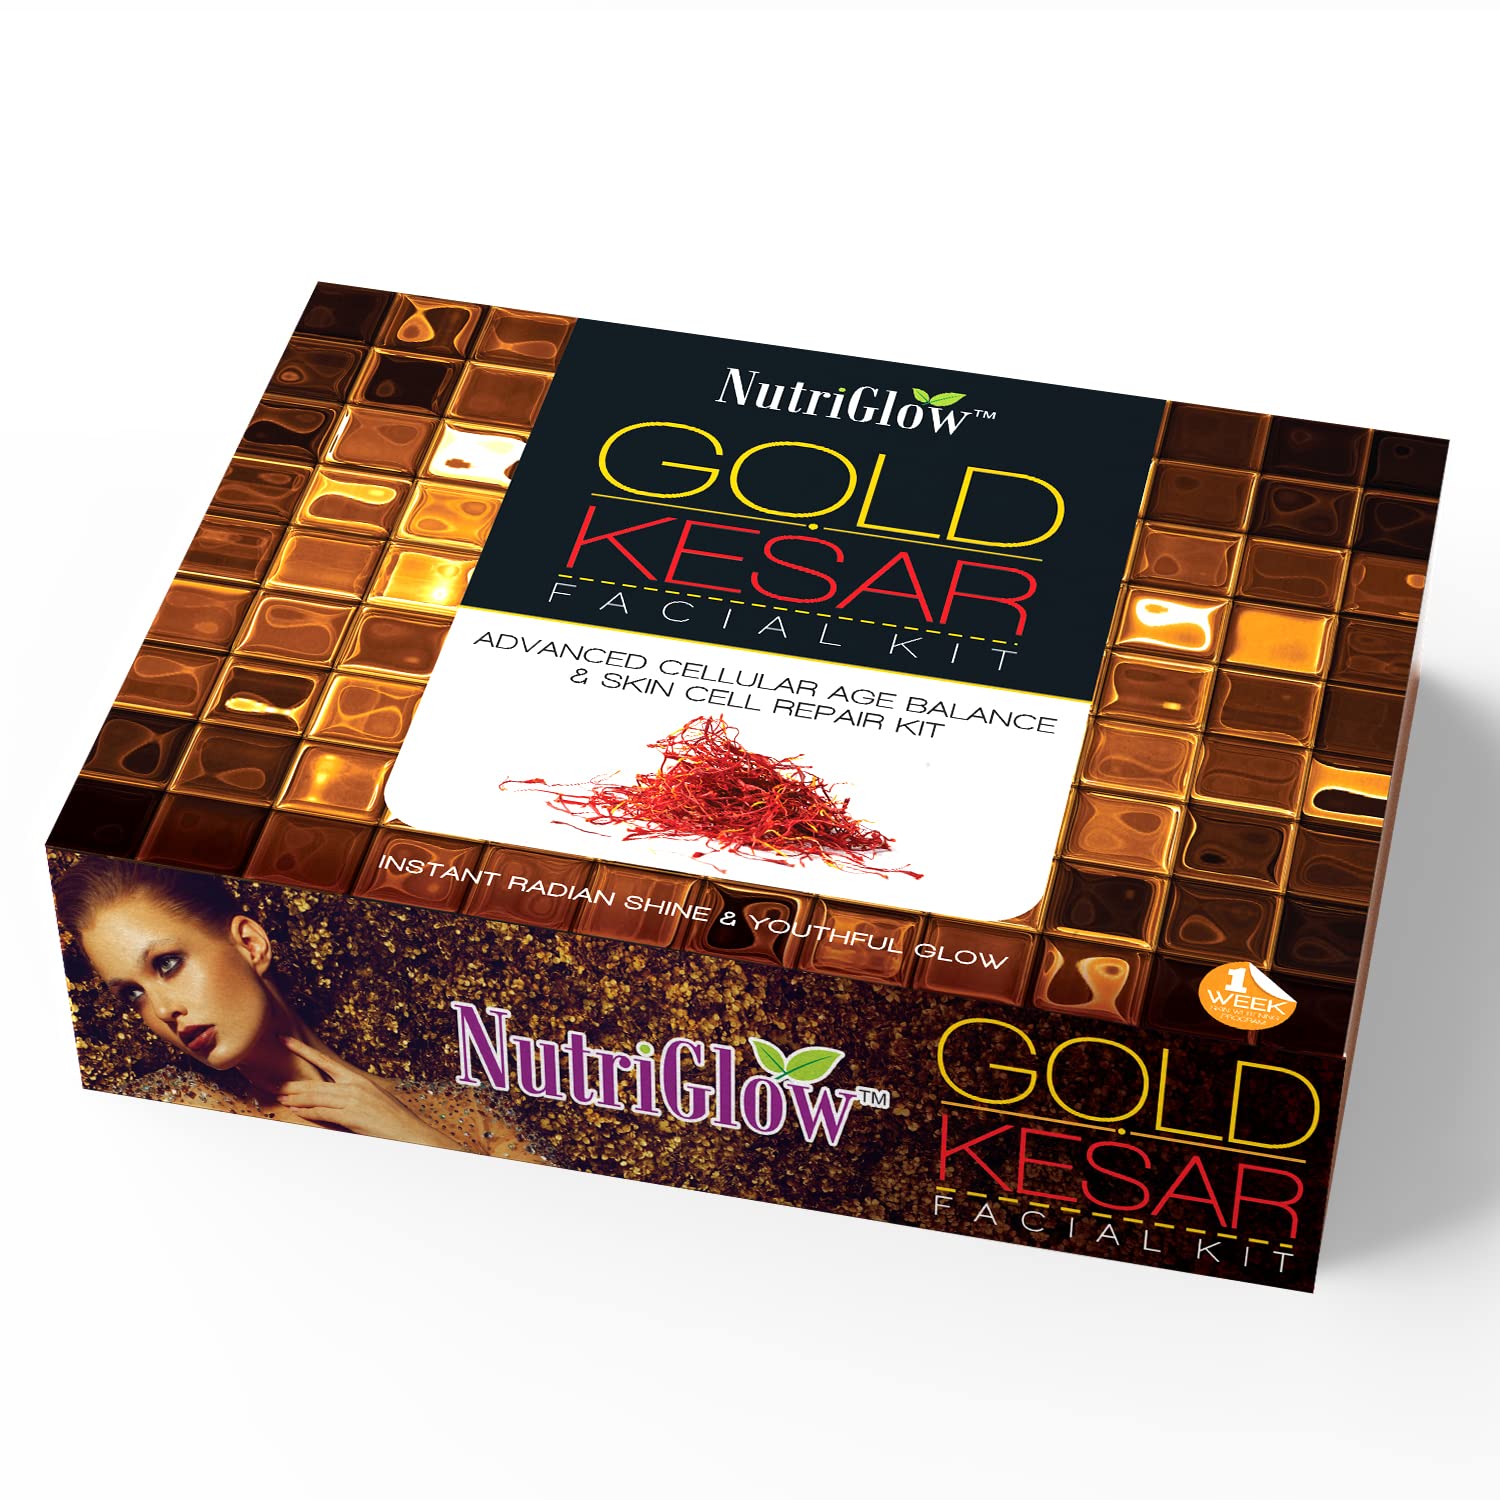 Buy NutriGlow Gold Kesar Facial Kit for Women online usa [ USA ] 